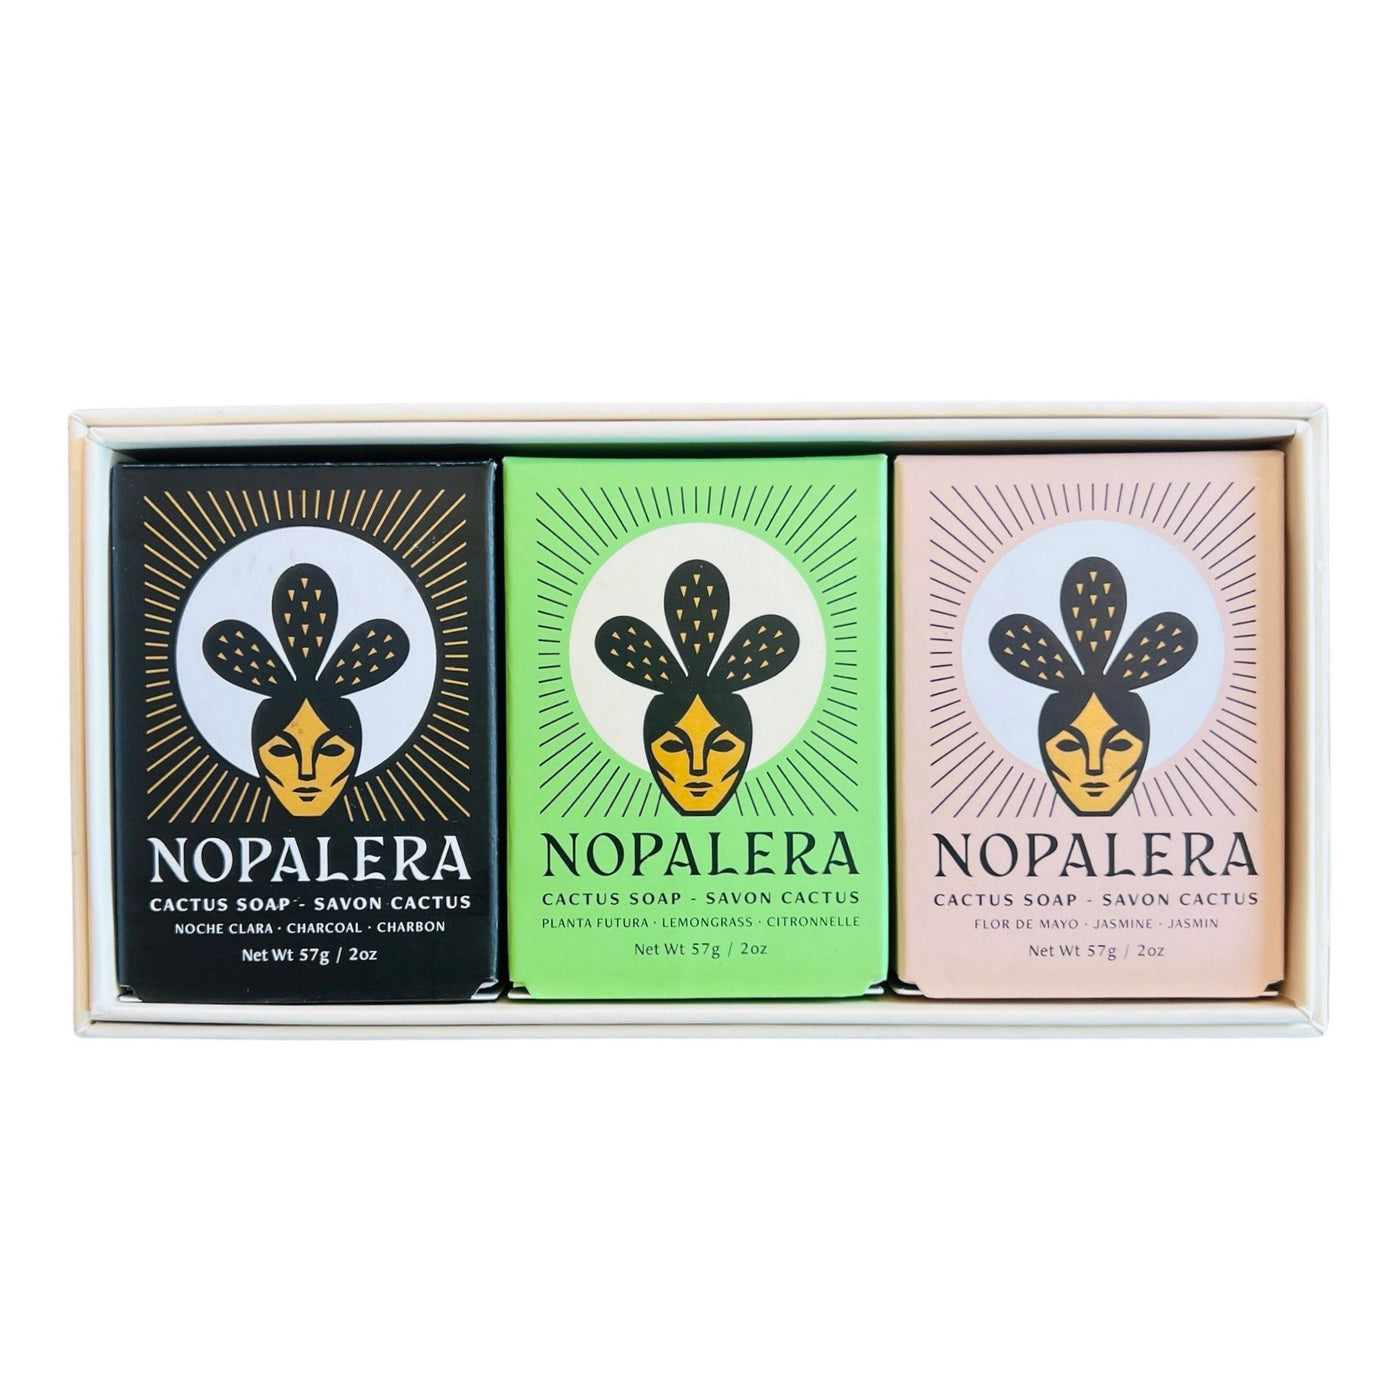 Three 2oz nopalera soaps in green, black and lavender packaging